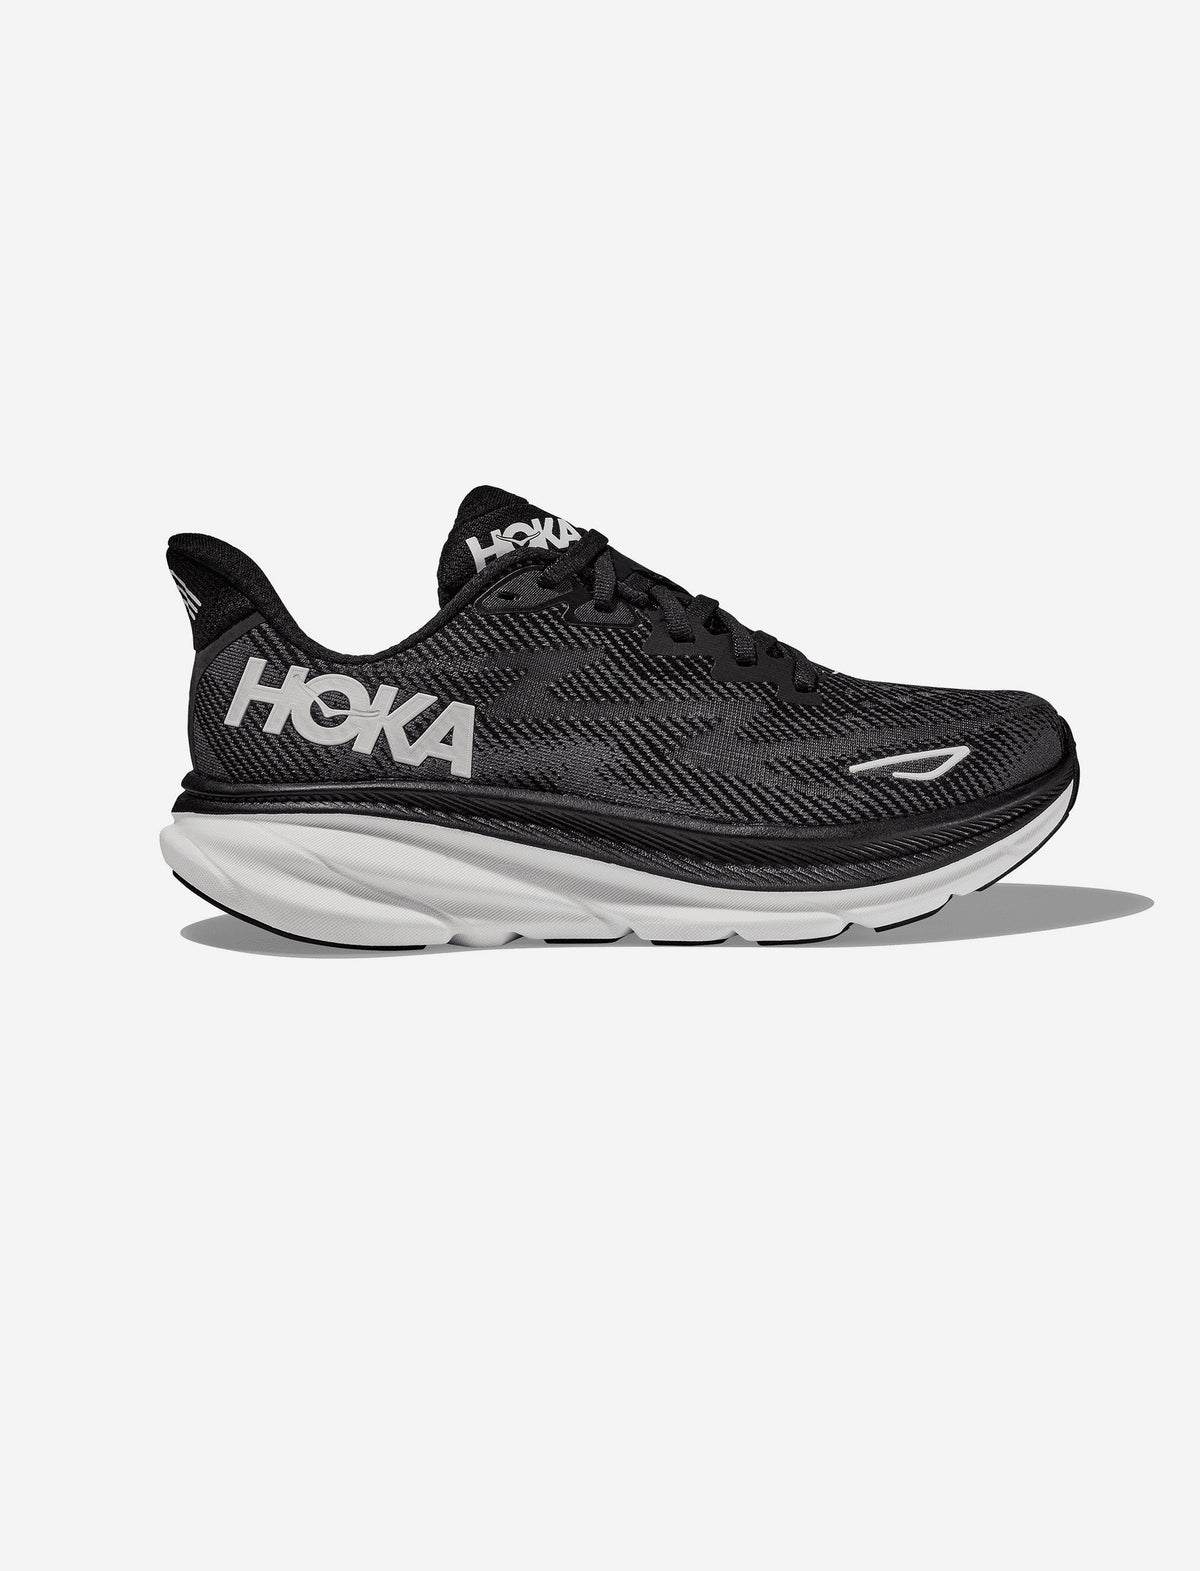 Hoka Clifton 9 - נעלי ספורט גברים הוקה קליפטון 9 בצבע שחור/לבן-Hoka-42-נאקו